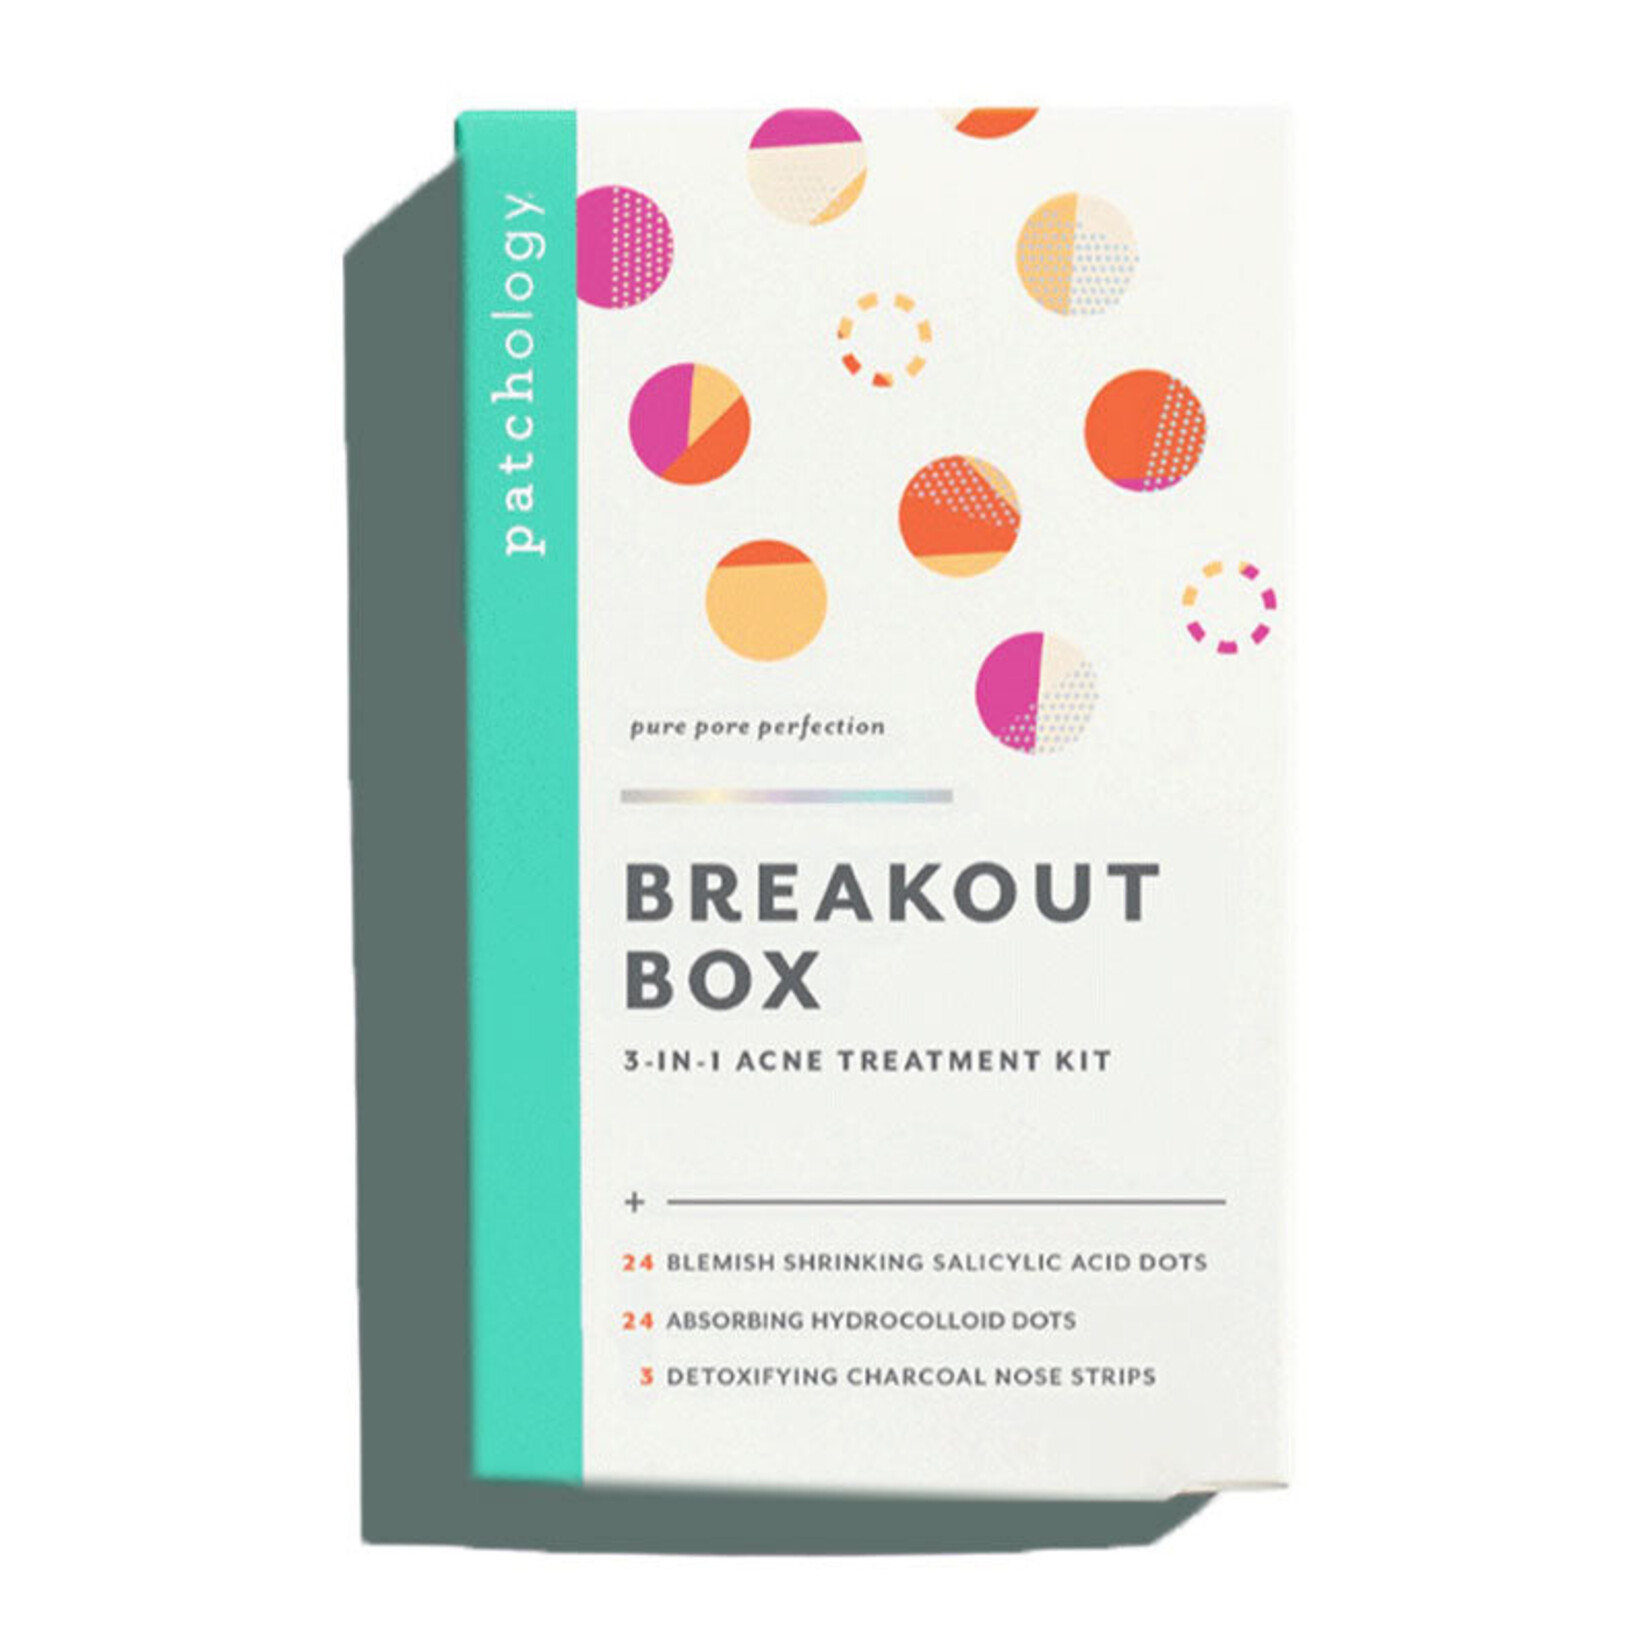 Breakout Box 3- IN-1 Acne Treatment Kit